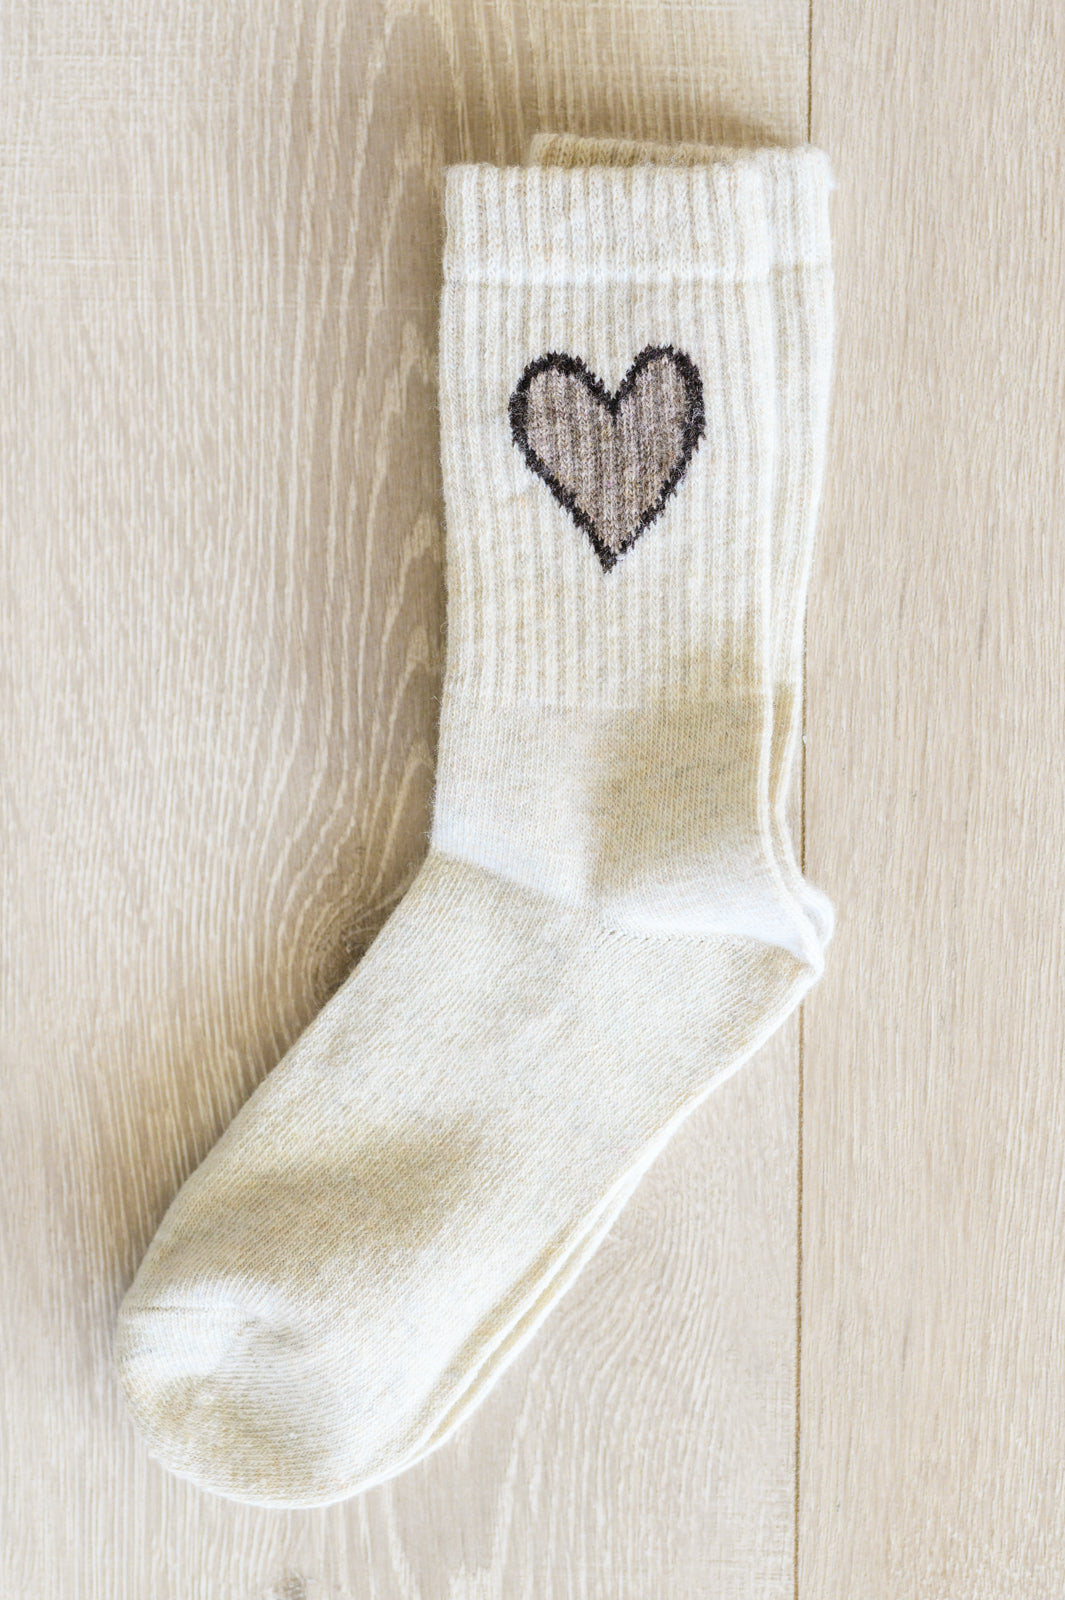 Subtle Emotions Wool Socks Set of 3 (Online Exclusive)